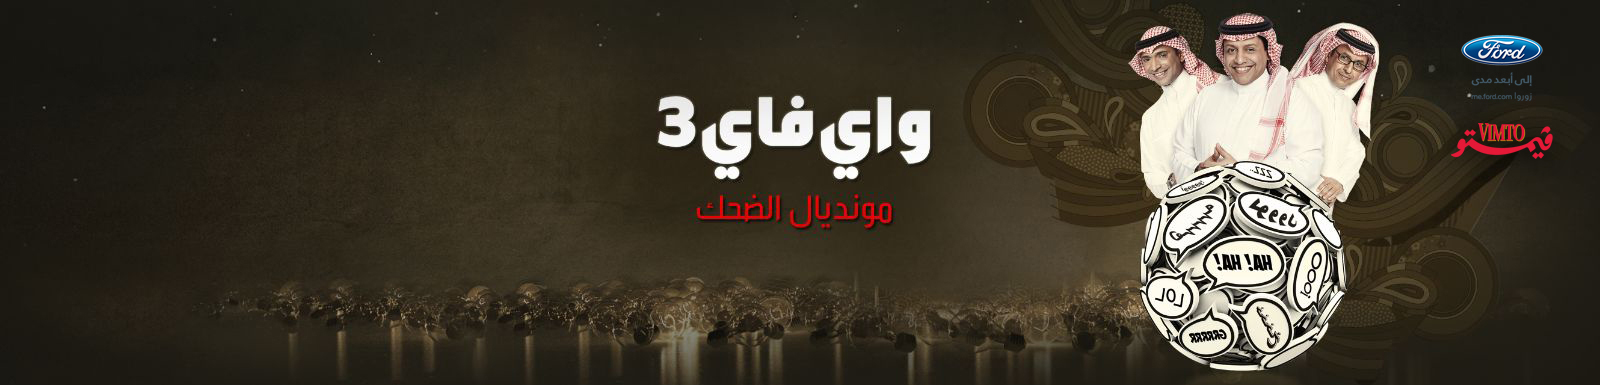 يوتيوب أبو شنب وأغنية ميو واي فاي 3